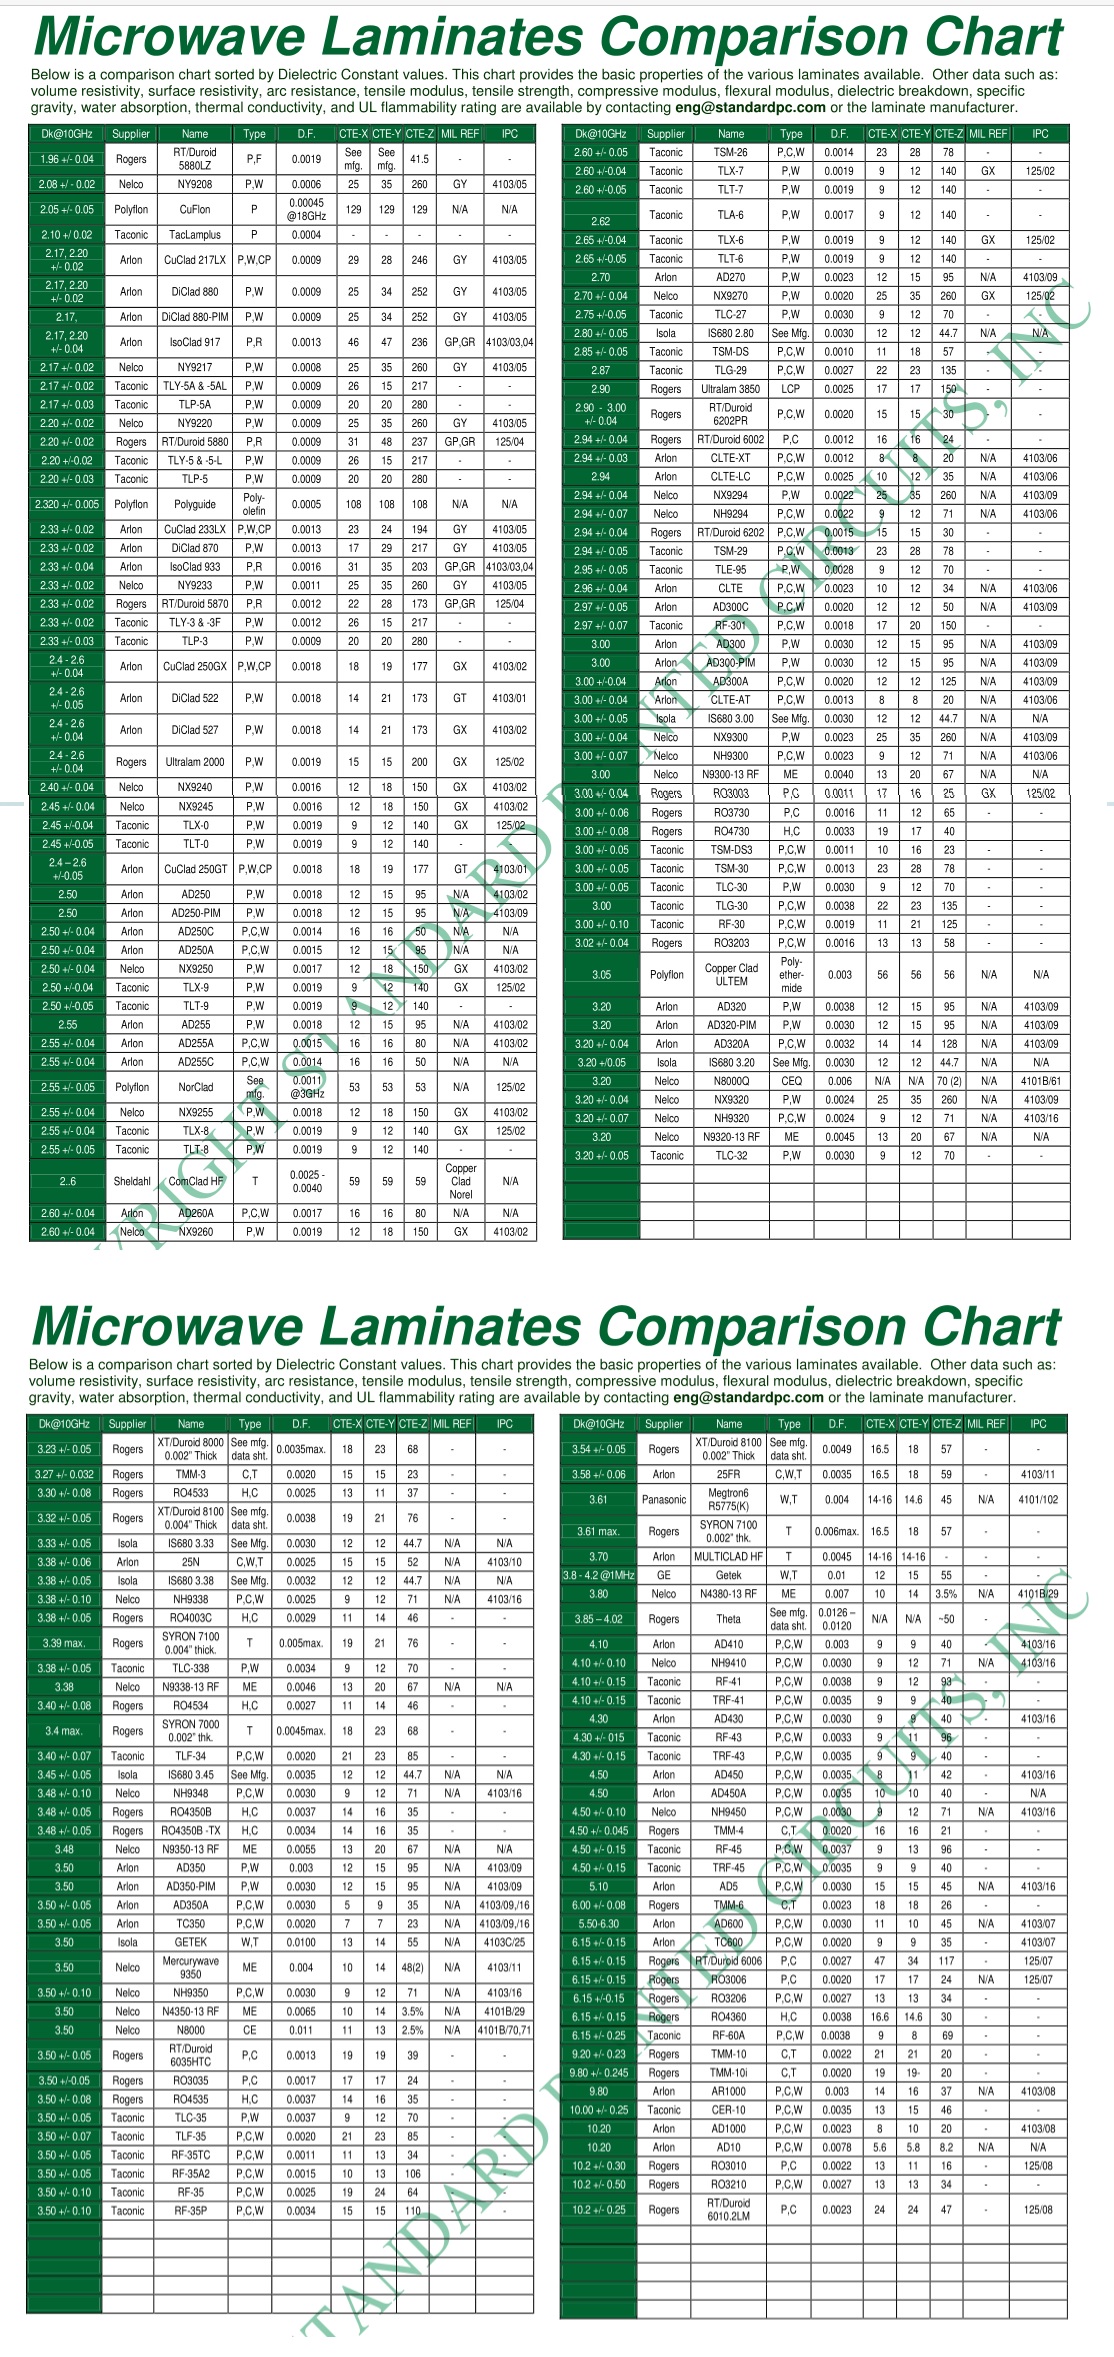 Microwave laminate compasion chart.jpg